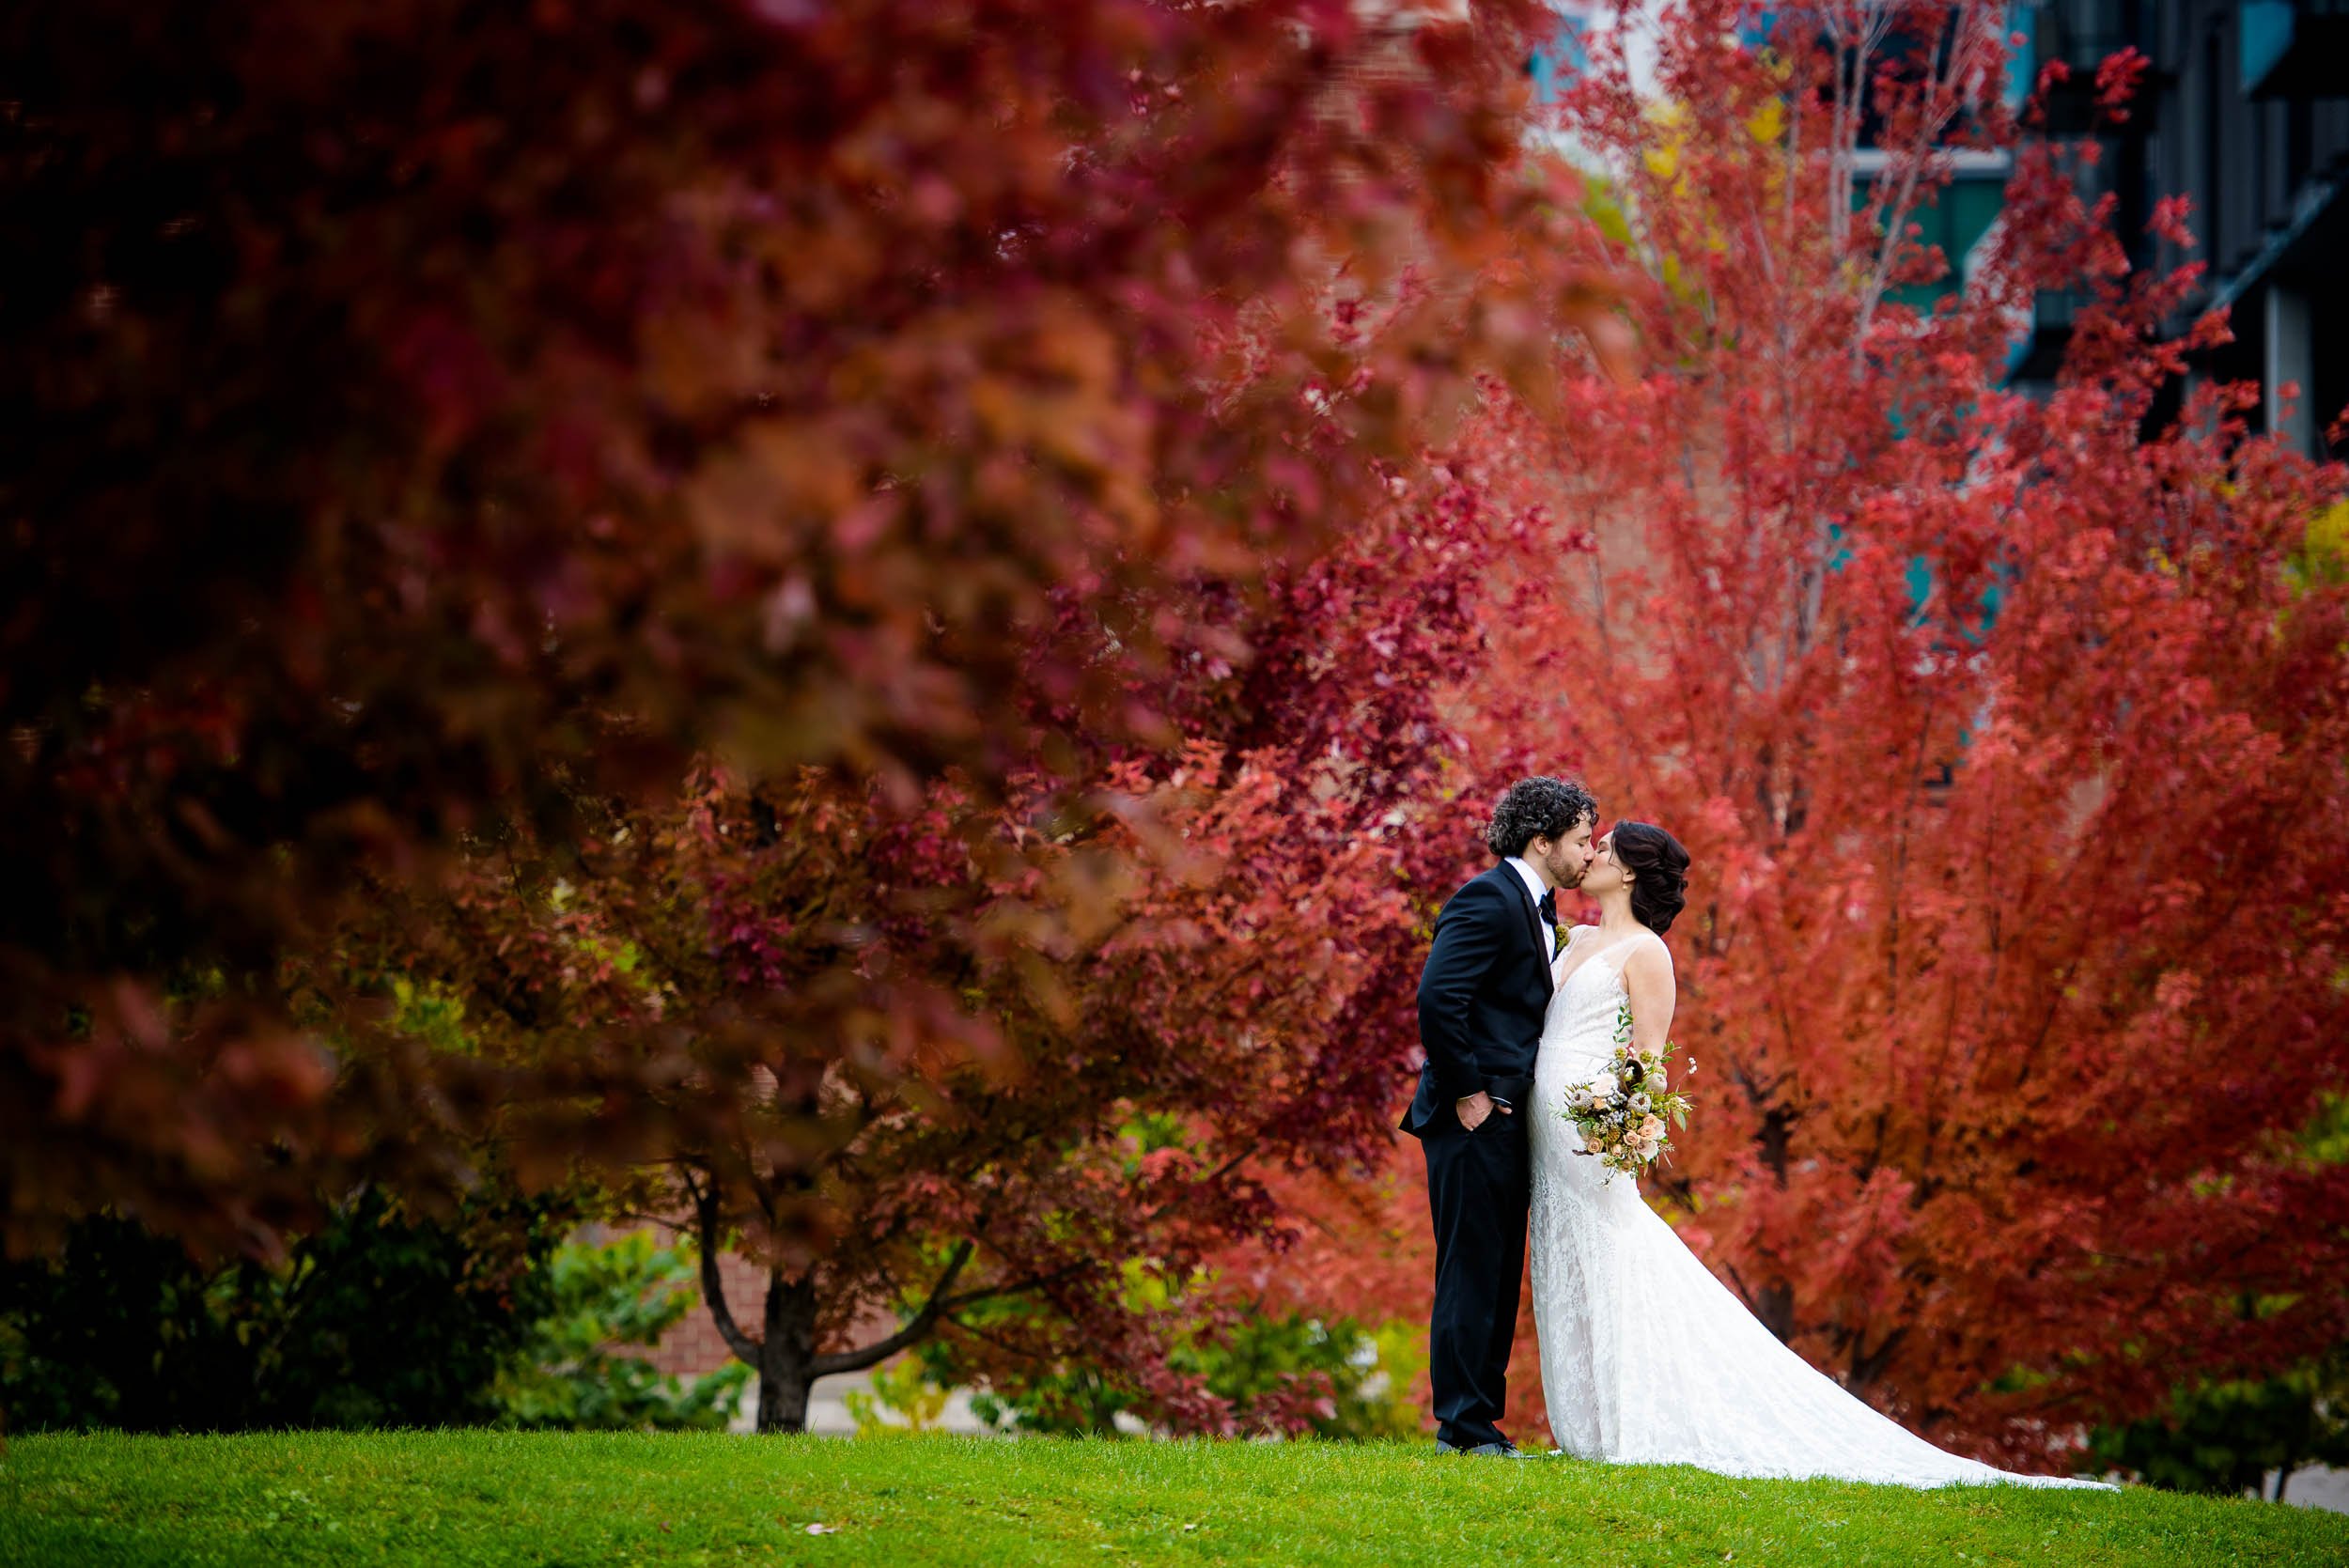 Loft on Lake | Fall Colors Wedding Portrait | Chicago IL